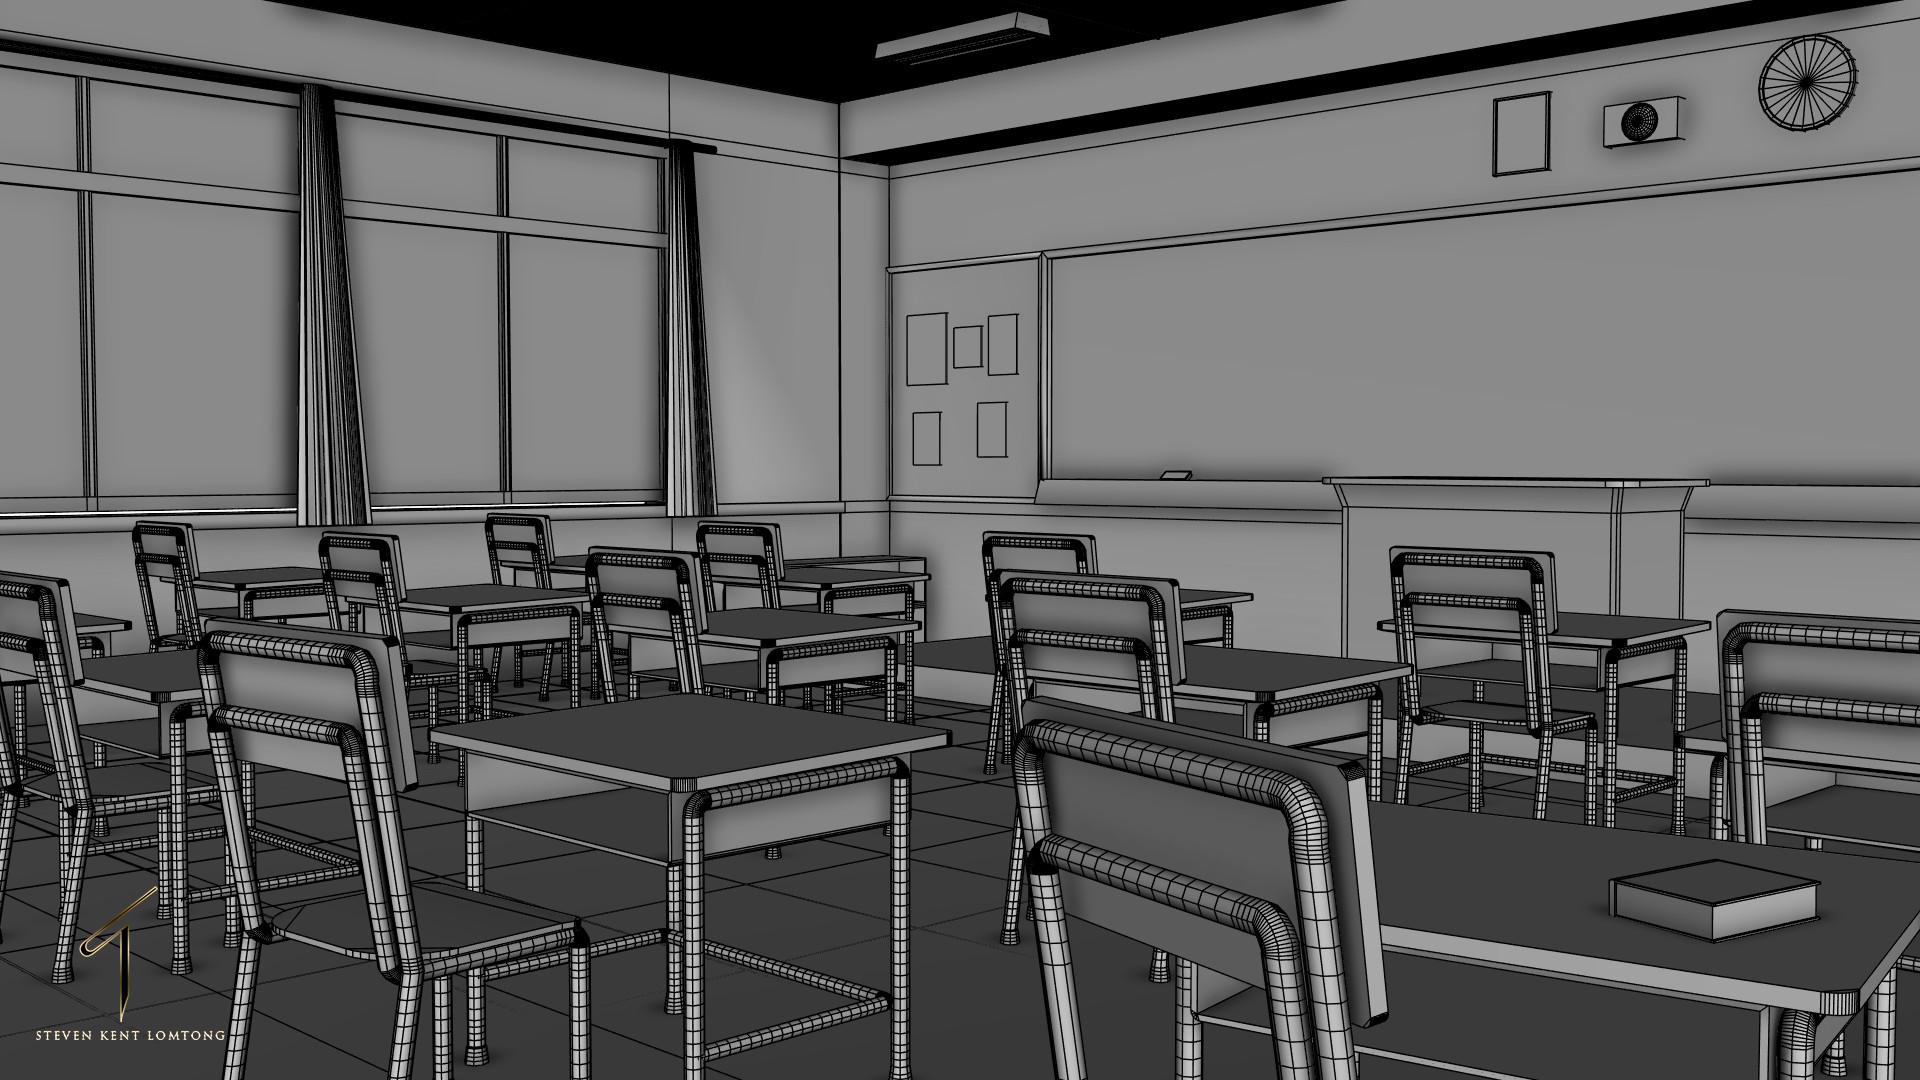 Steven Kent Lomtong - Anime Classroom